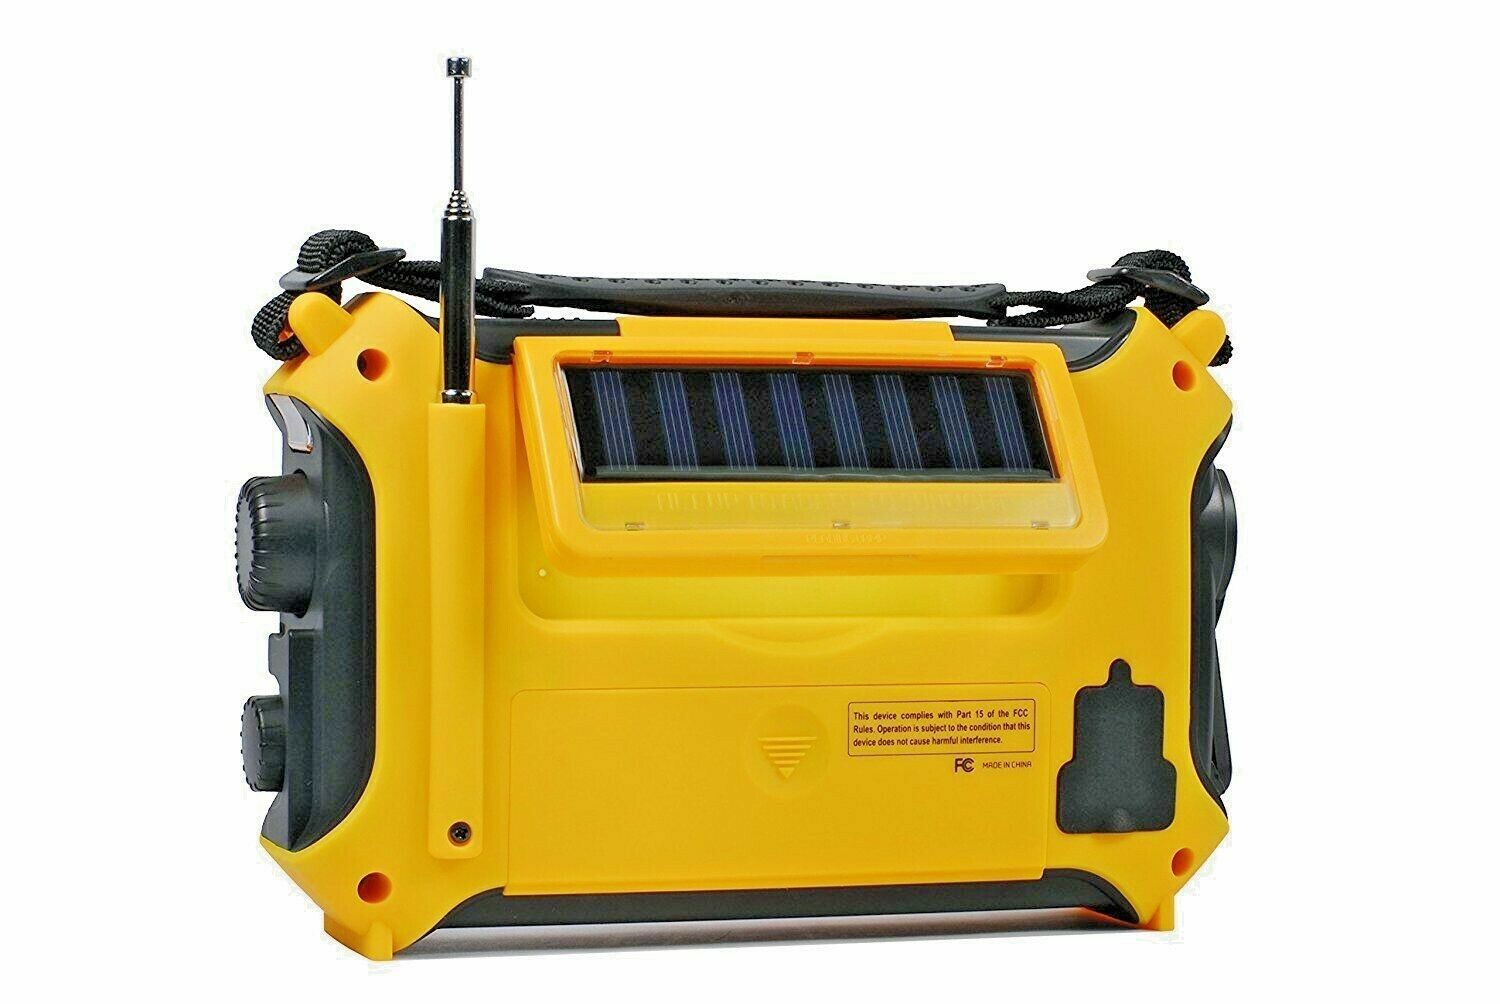 Kaito Portable AM/FM Radios, Yellow, KA500YLW - image 3 of 4